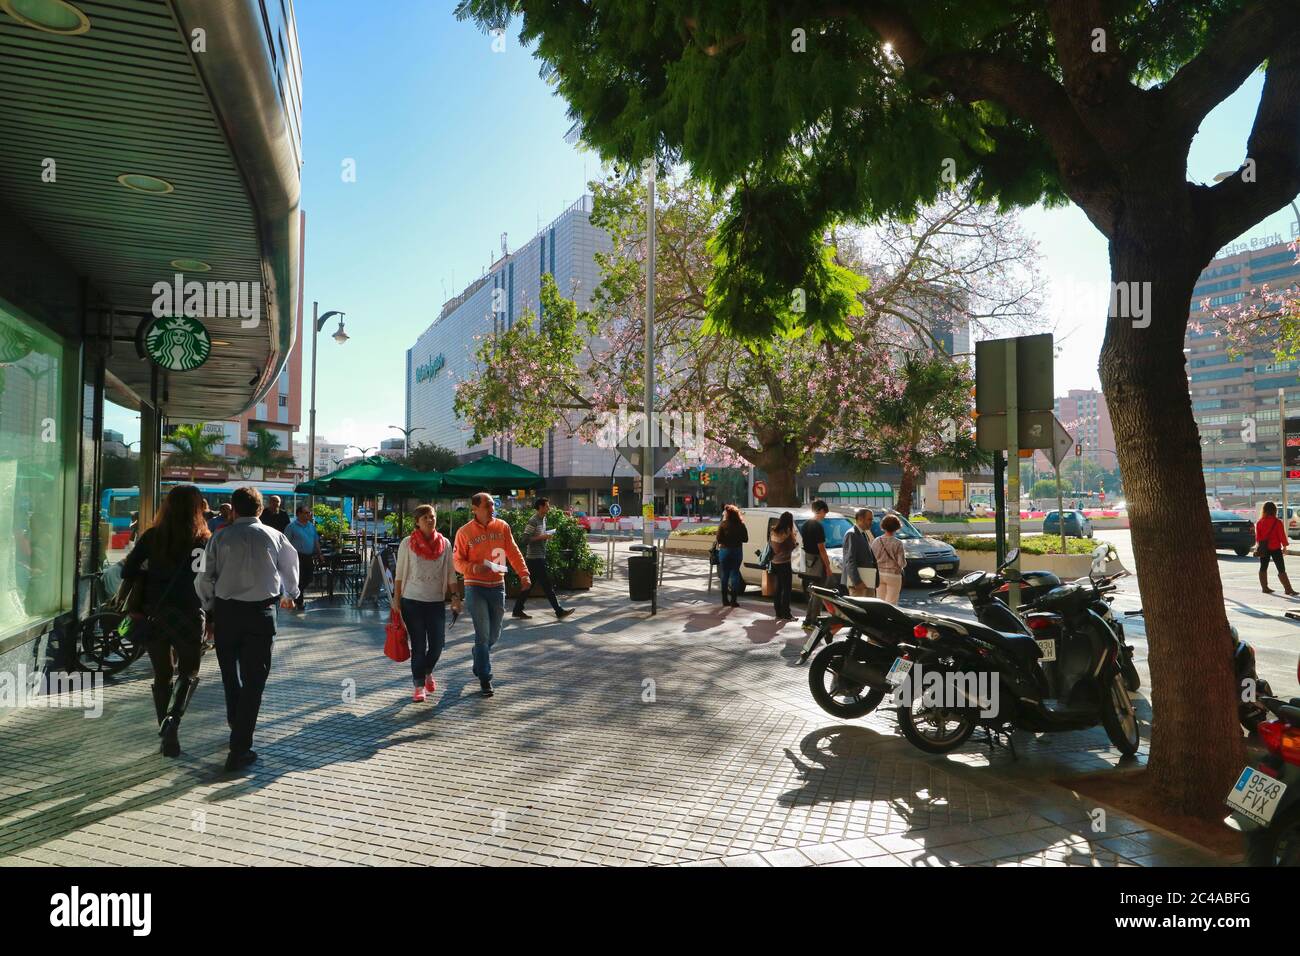 Calle Hilera avec le grand magasin El Corte Ingles en arrière-plan. Malaga, Costa del sol, province de Malaga, Andalousie, sud de l'Espagne. Banque D'Images